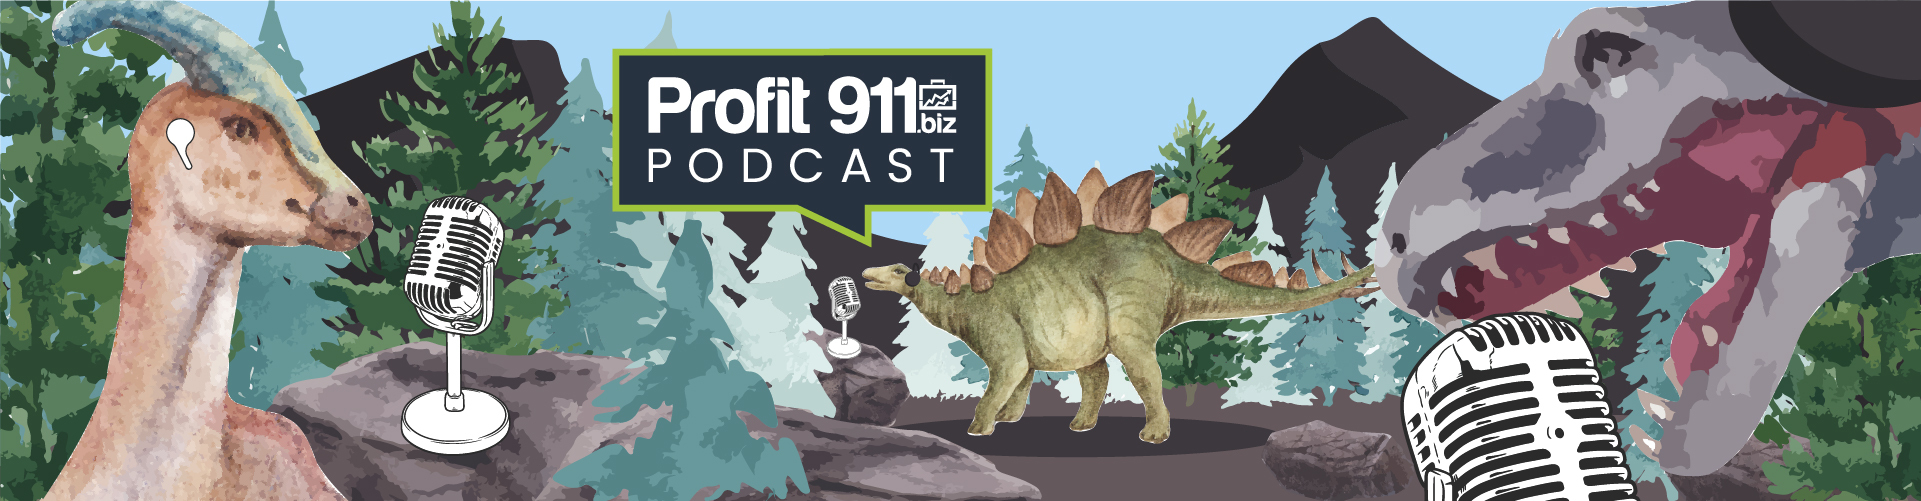 Profit 911 Podcast